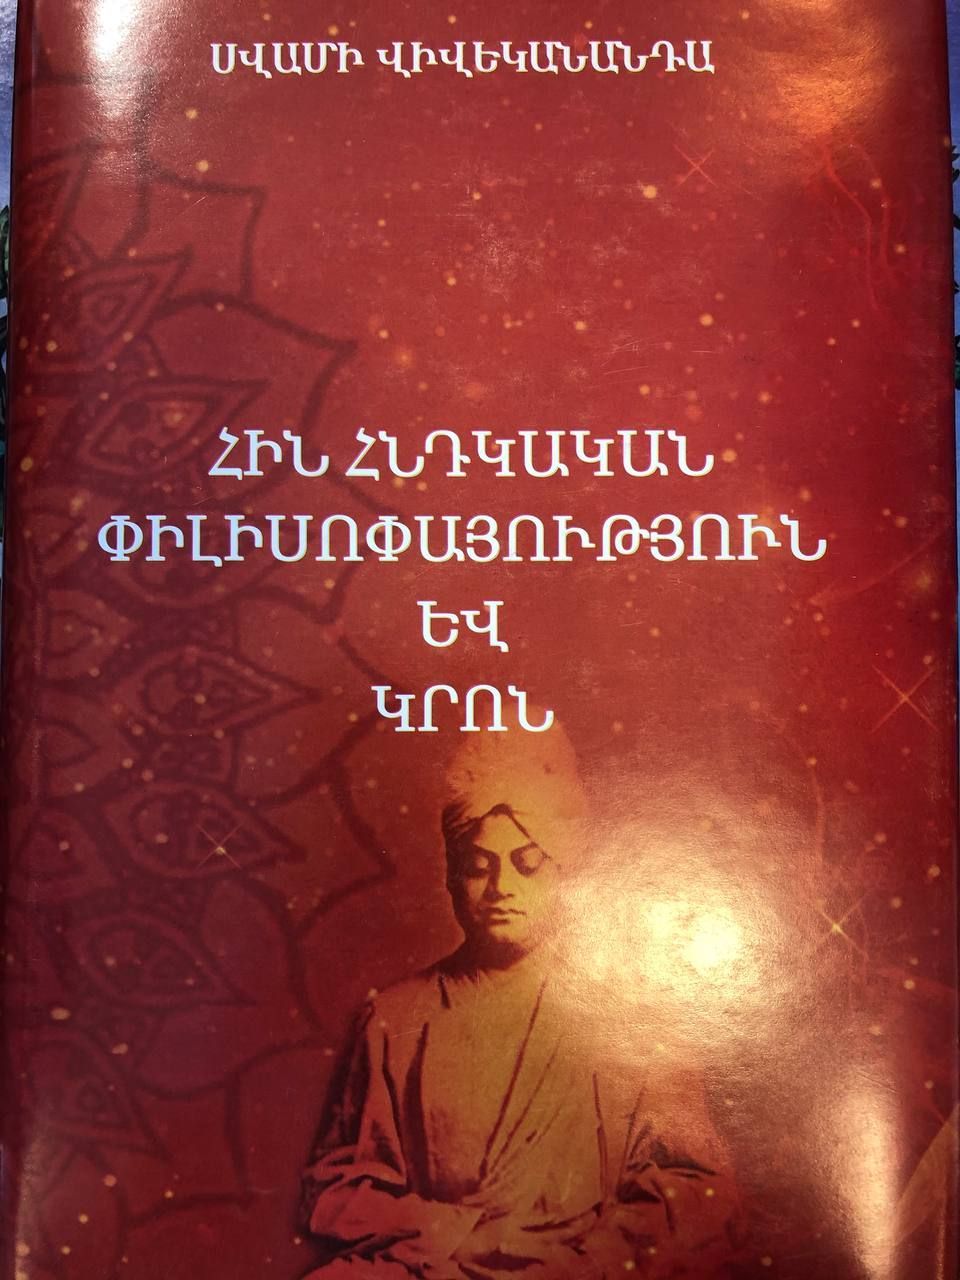 Swami Vivekananda - Ancient Indian Philosophy and Religion